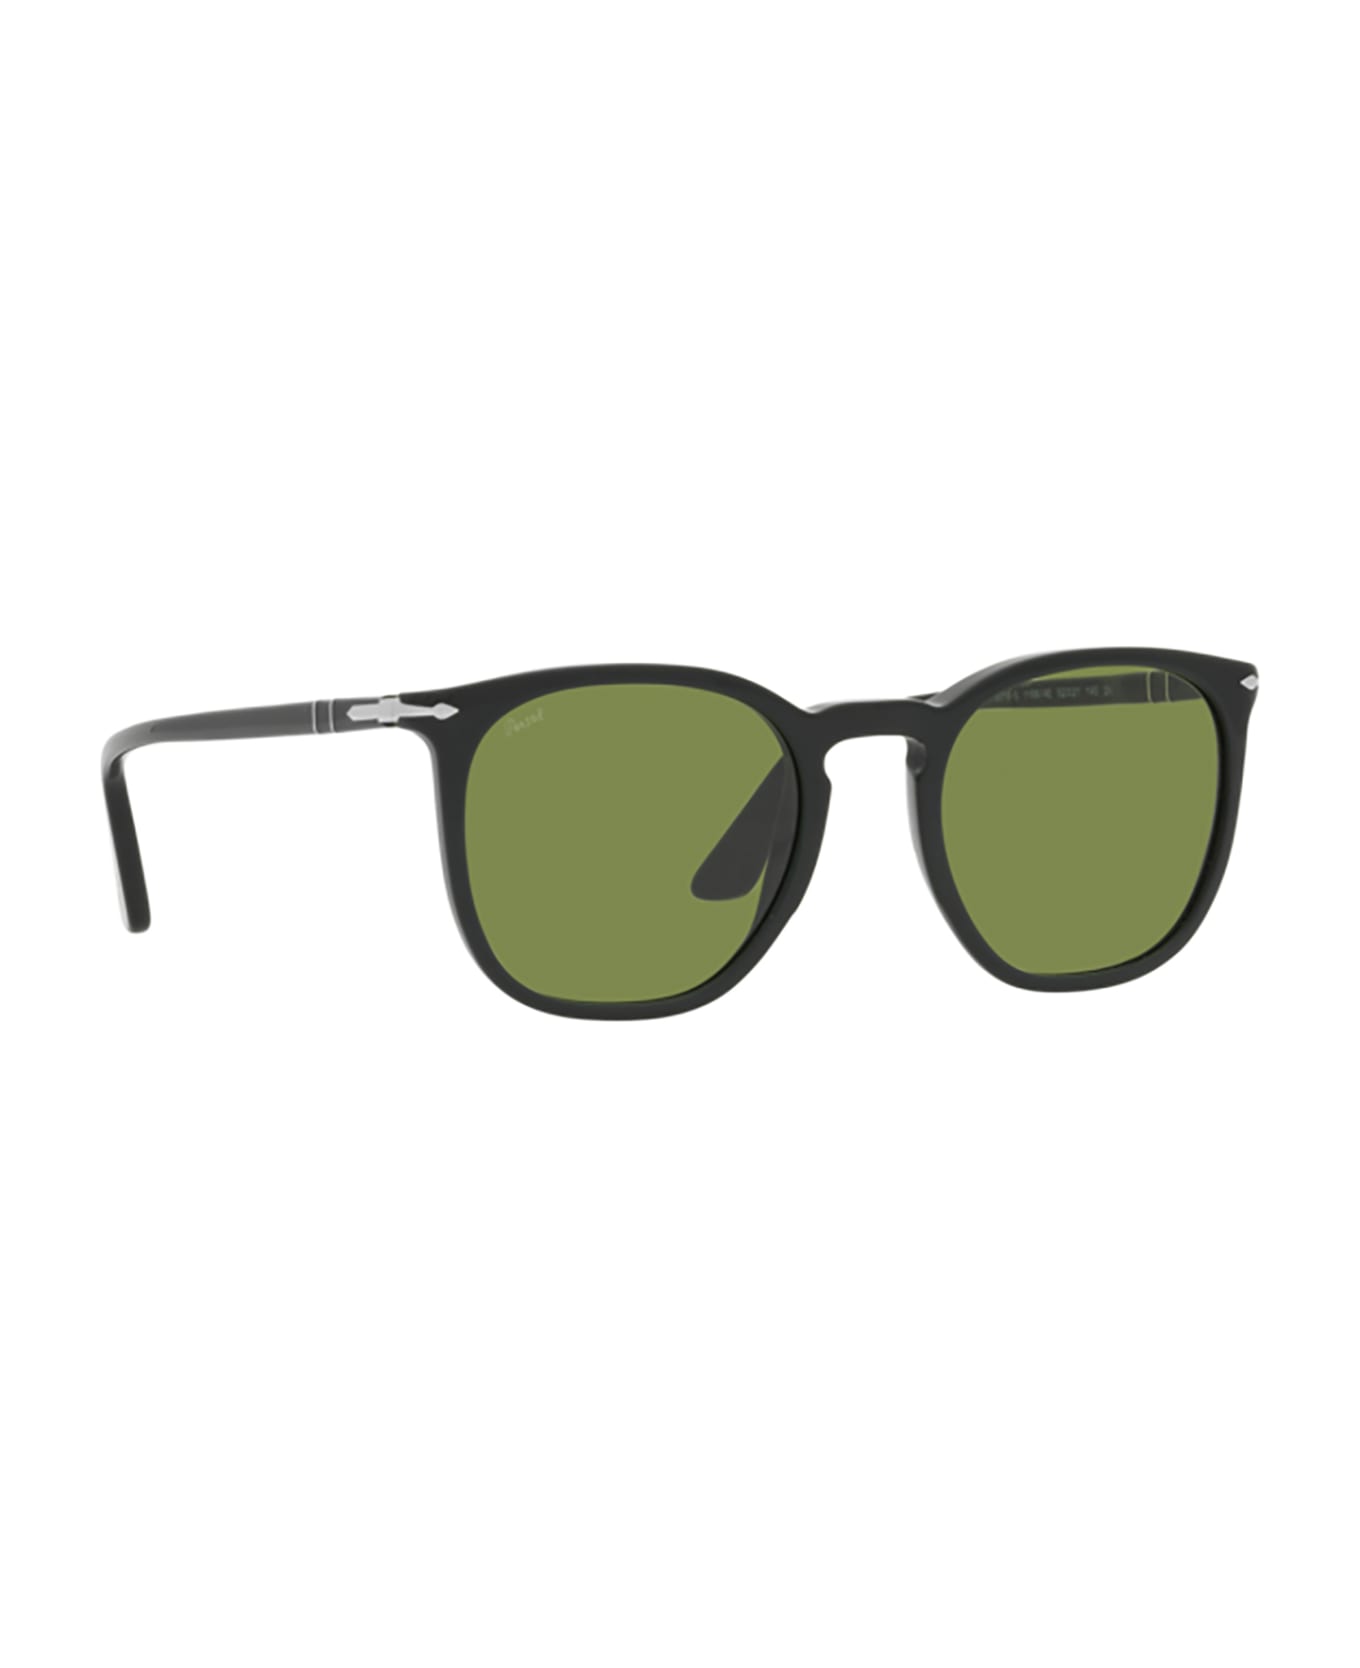 Persol Po3316s Matte Dark Green Sunglasses - Matte Dark Green サングラス